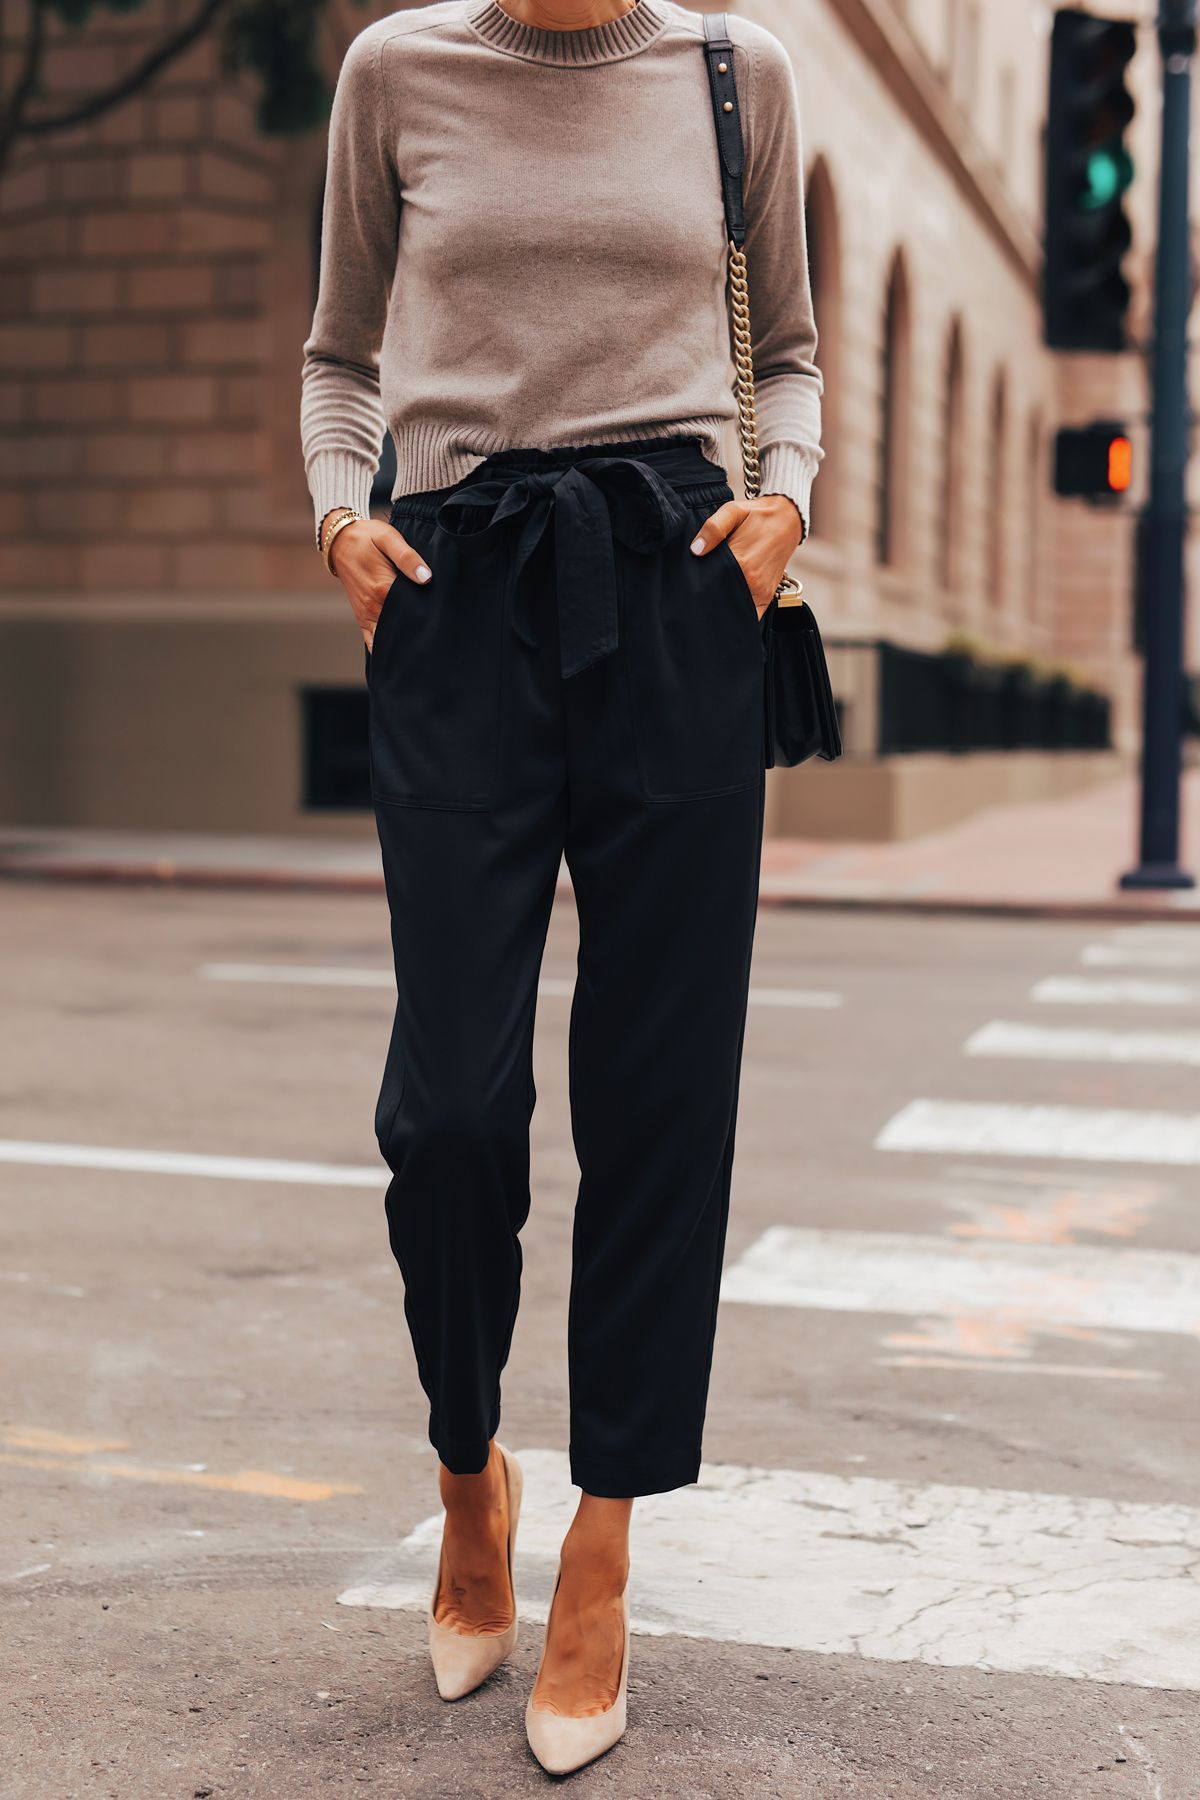 Everlane's Under $100 Cashmere Sweater | Fashion Jackson -   style 2019 work